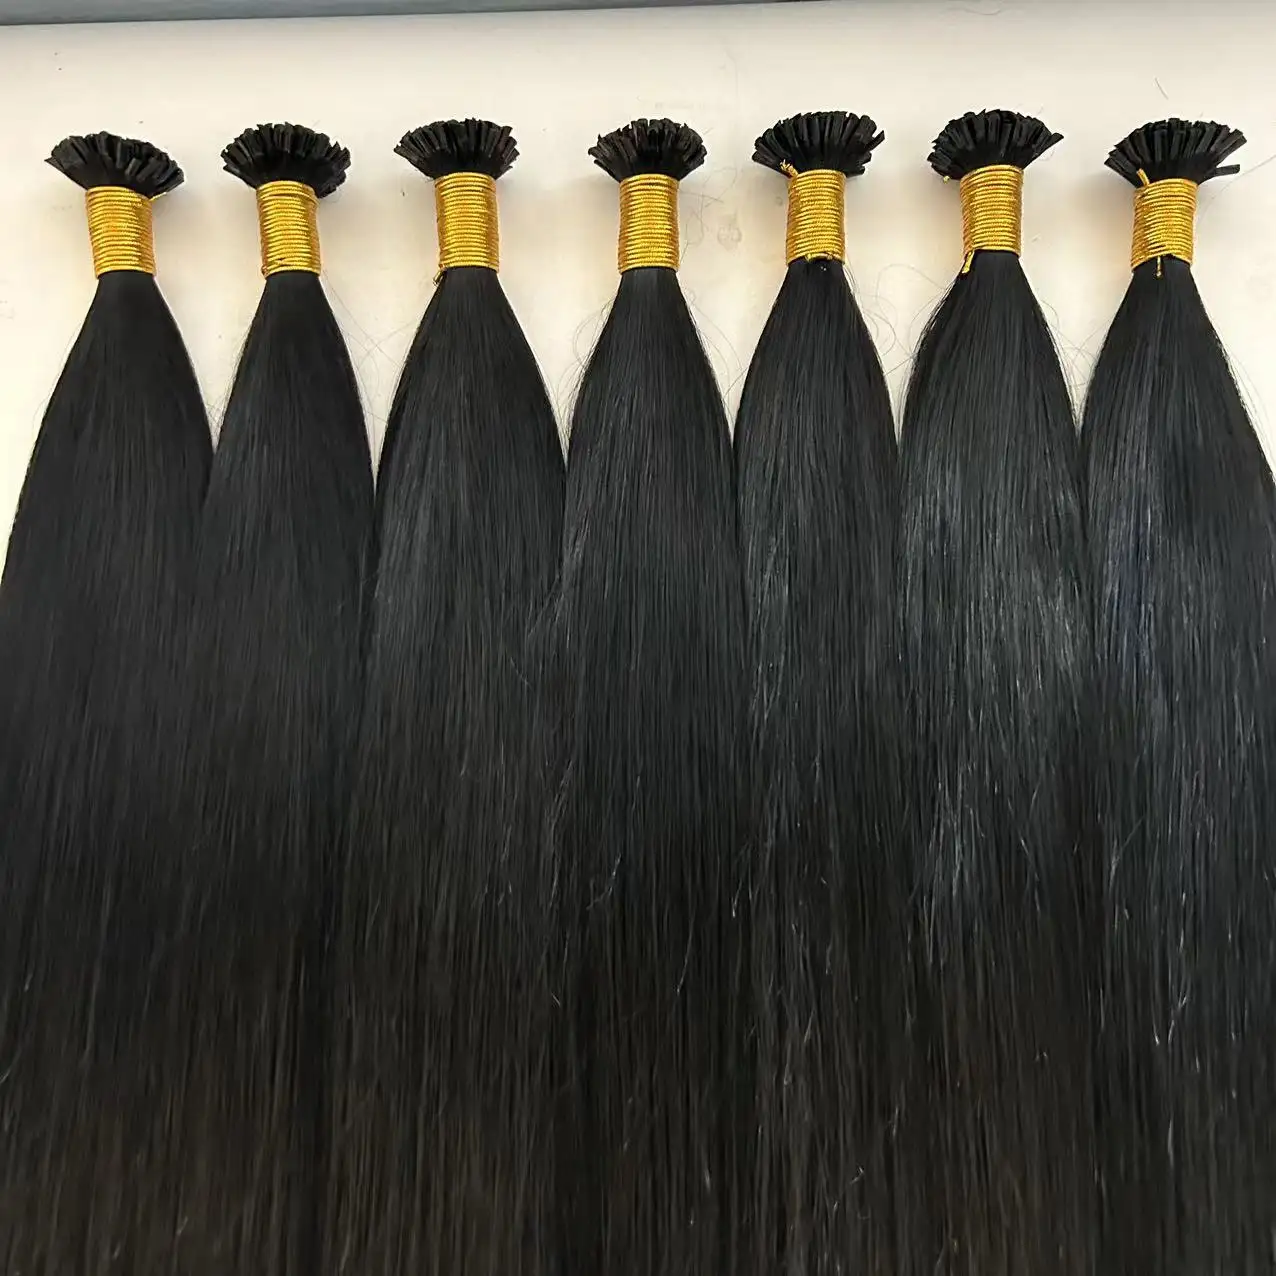 Kerati punta plana personalizar Color rizado V punta U extensión de cabello queratina doble dibujado humano con balayage colores extensión de cabello